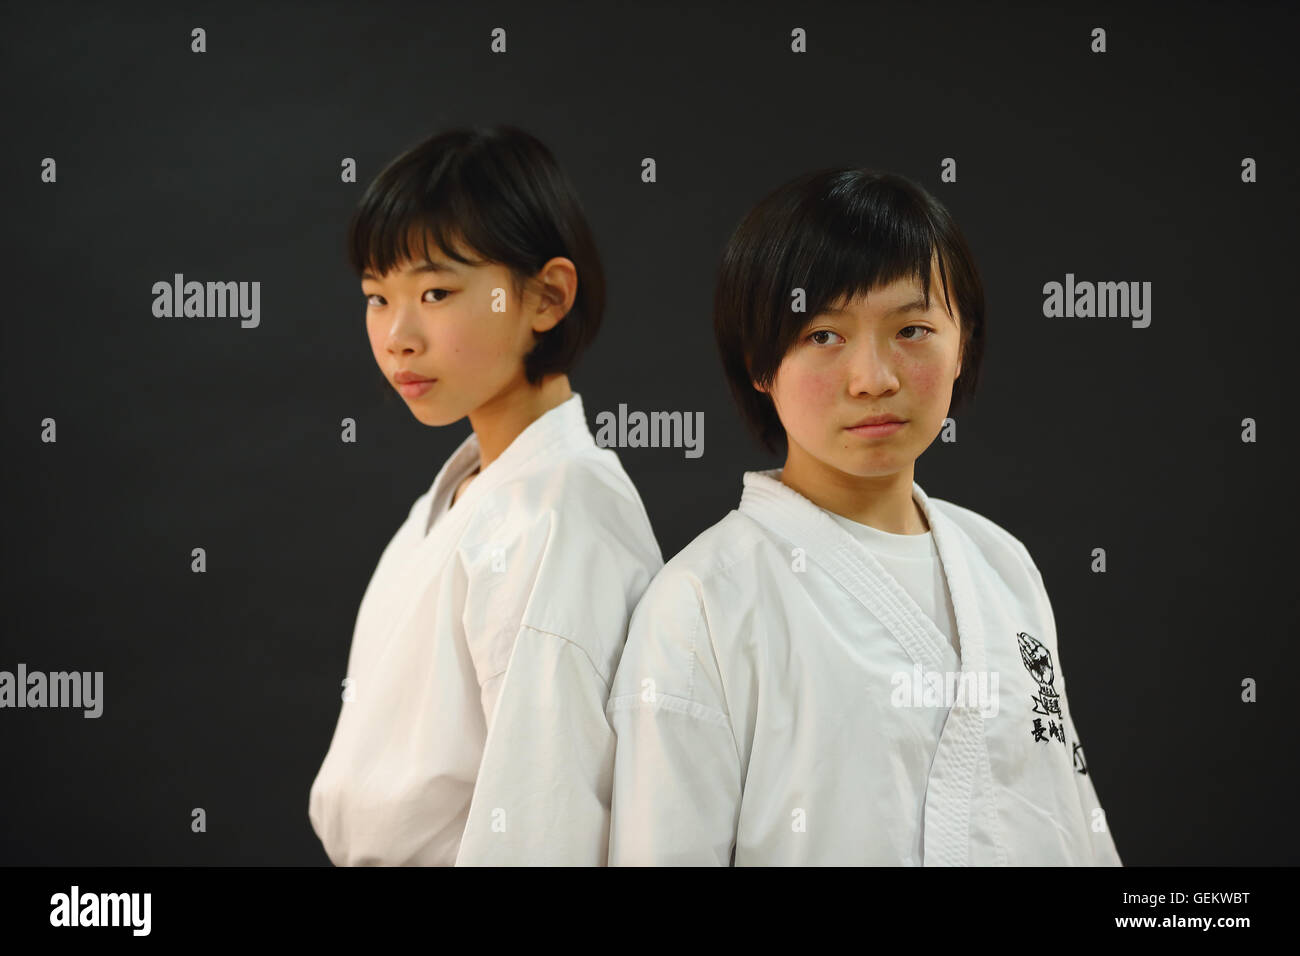 I ragazzi giapponesi nel karate uniforme su sfondo nero Foto Stock